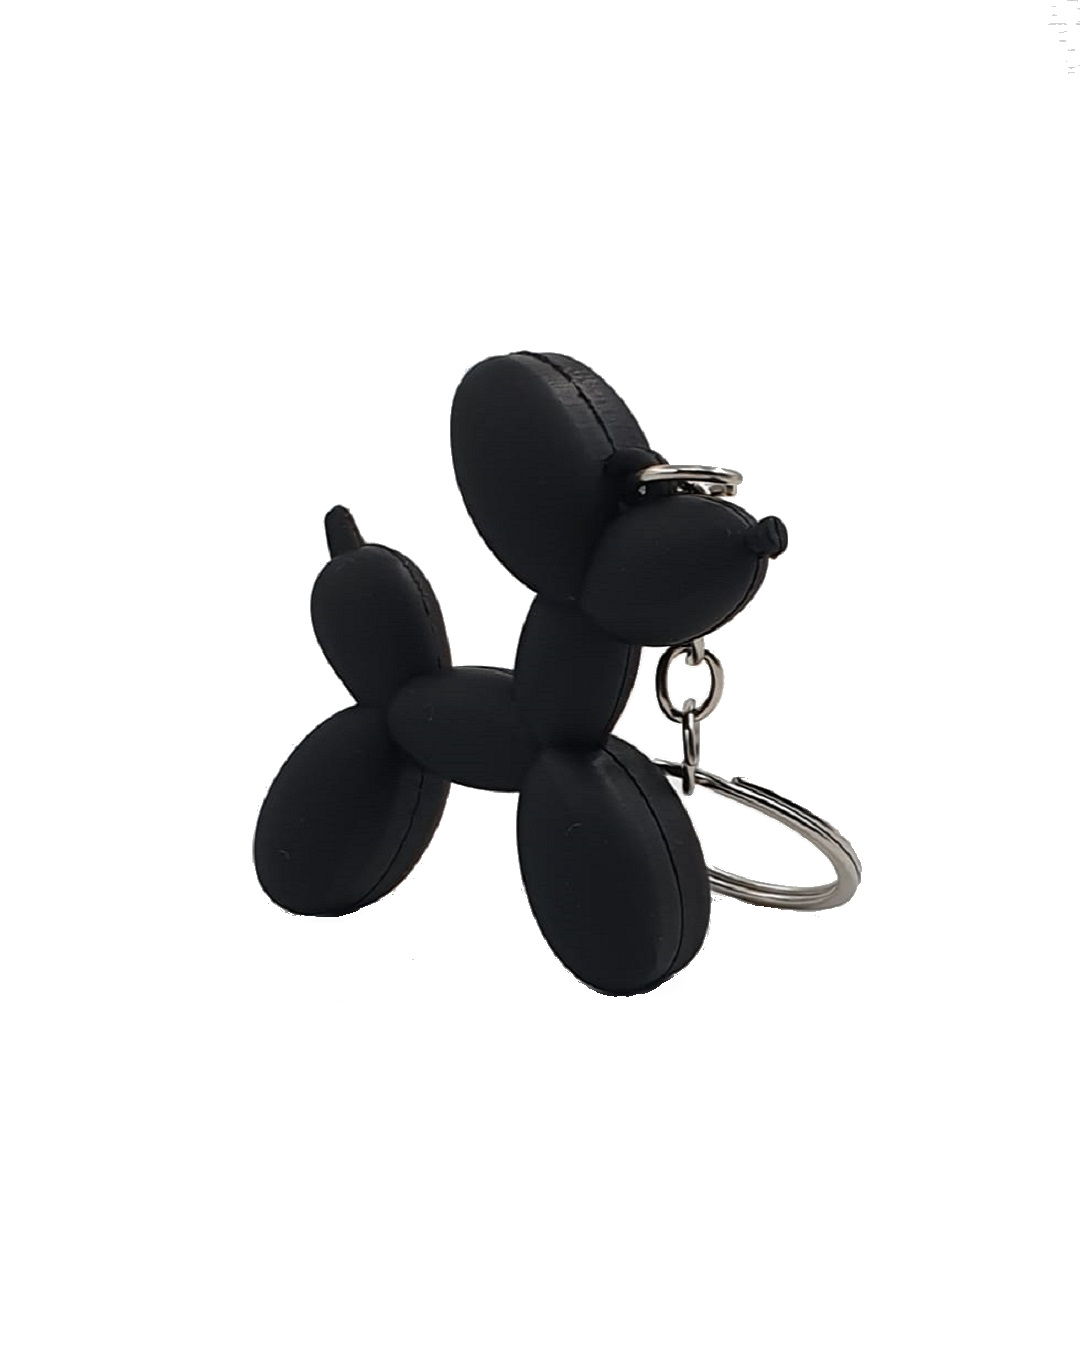 Black balloon dog keyring